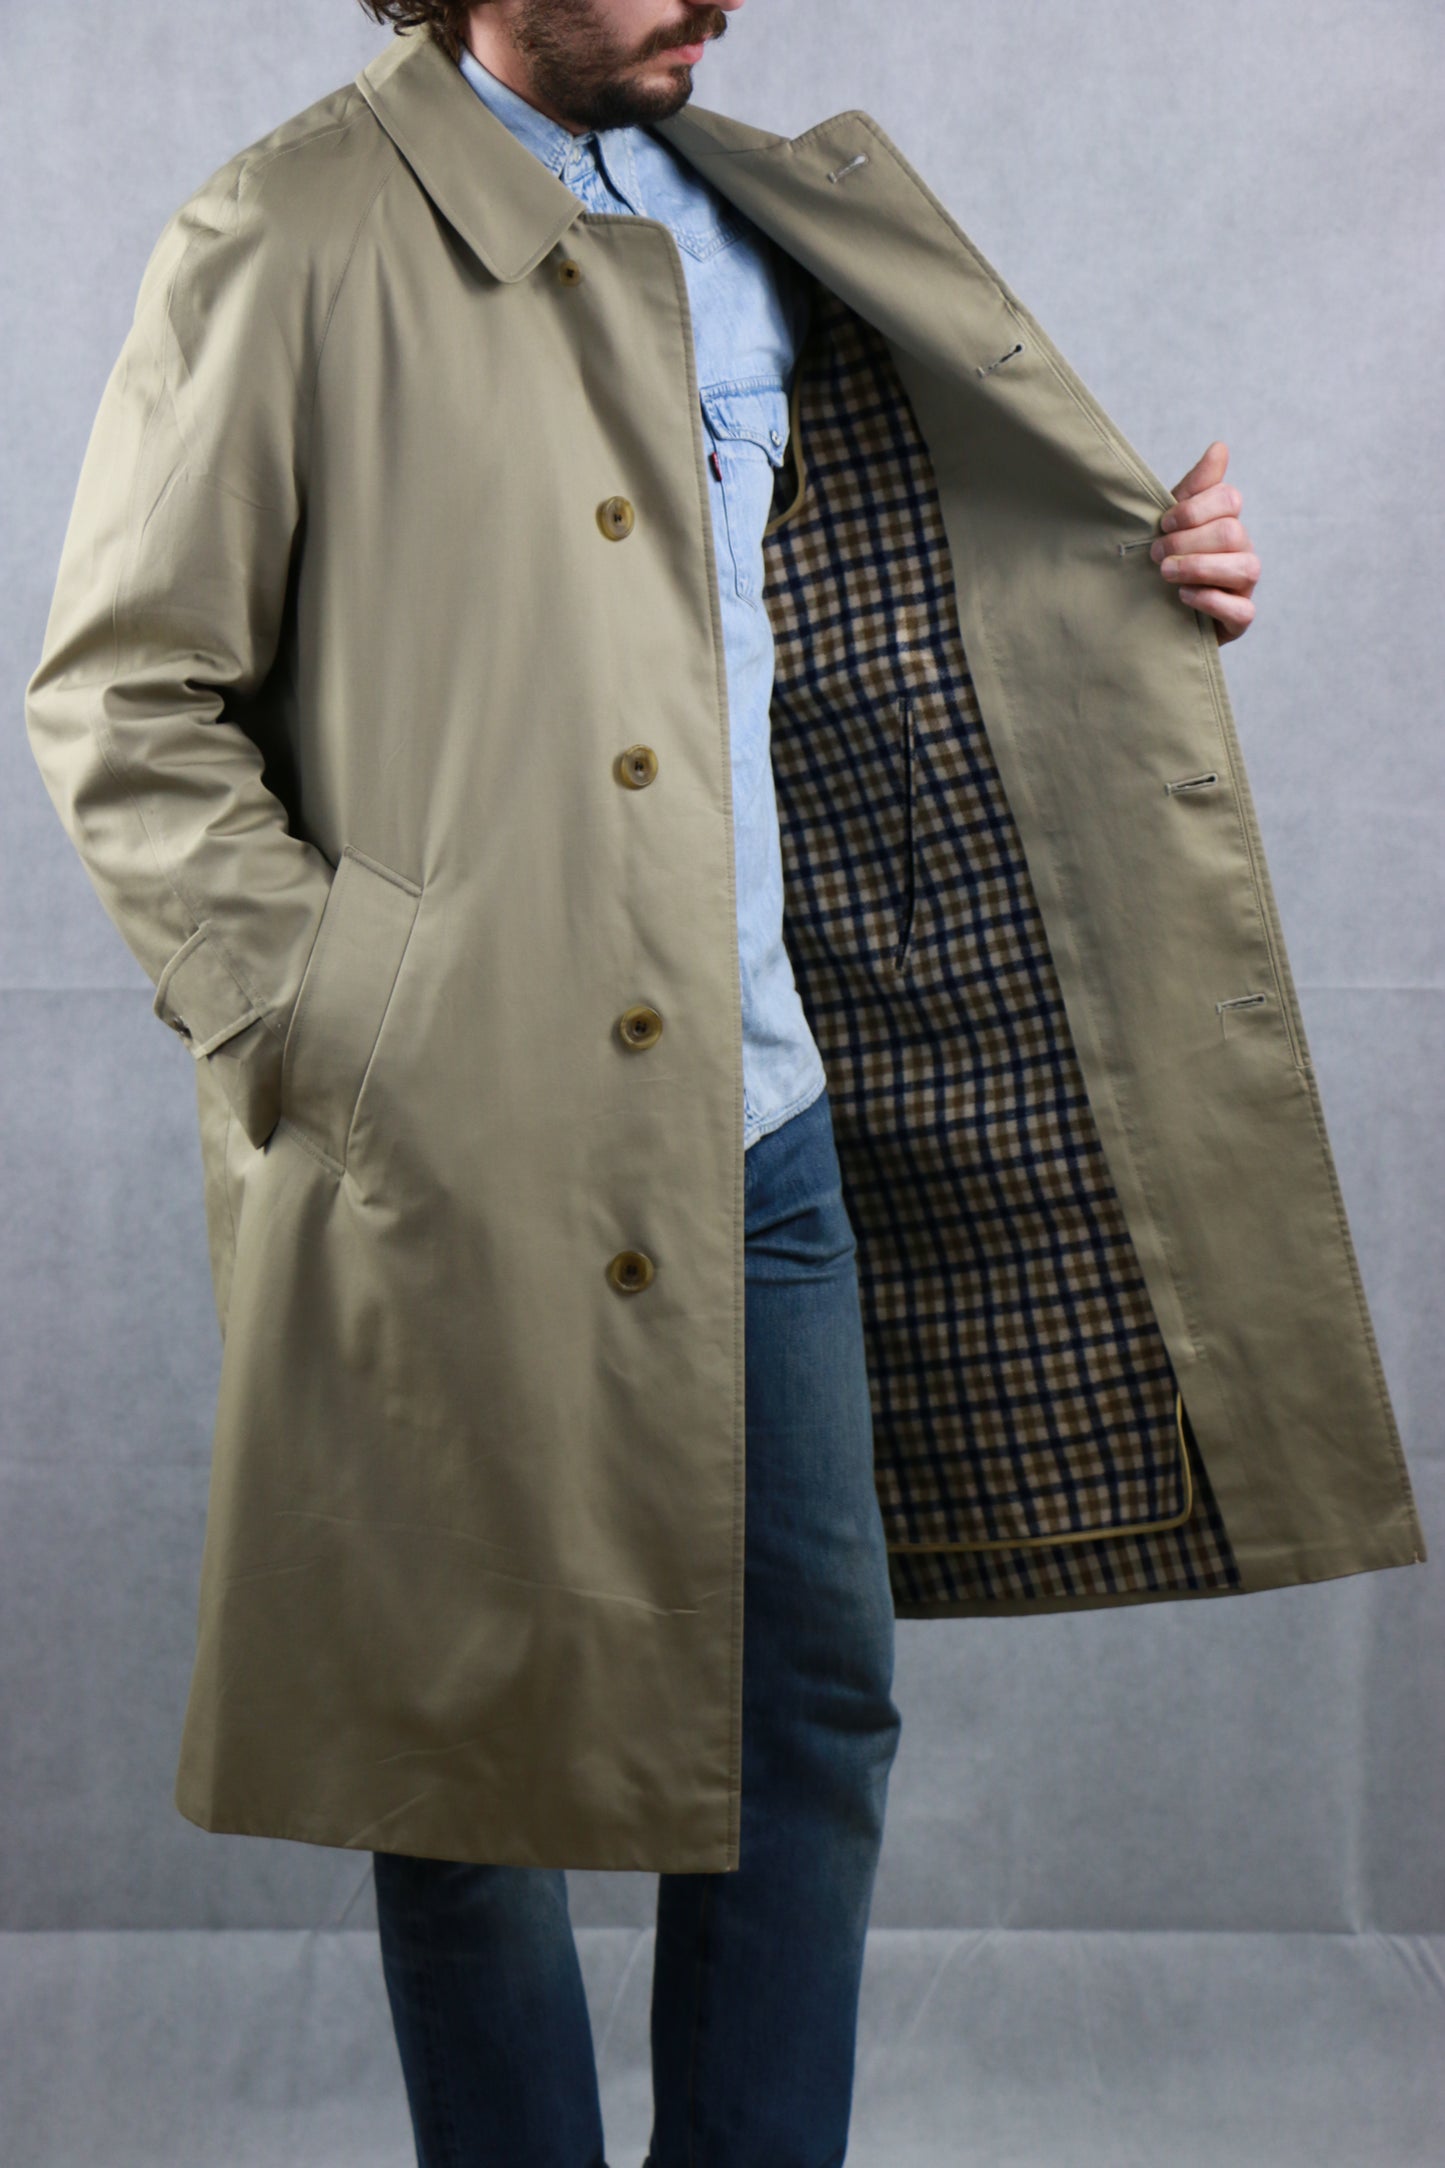 Aquascutum Trench Coat in Beige - vintage clothing clochard92.com